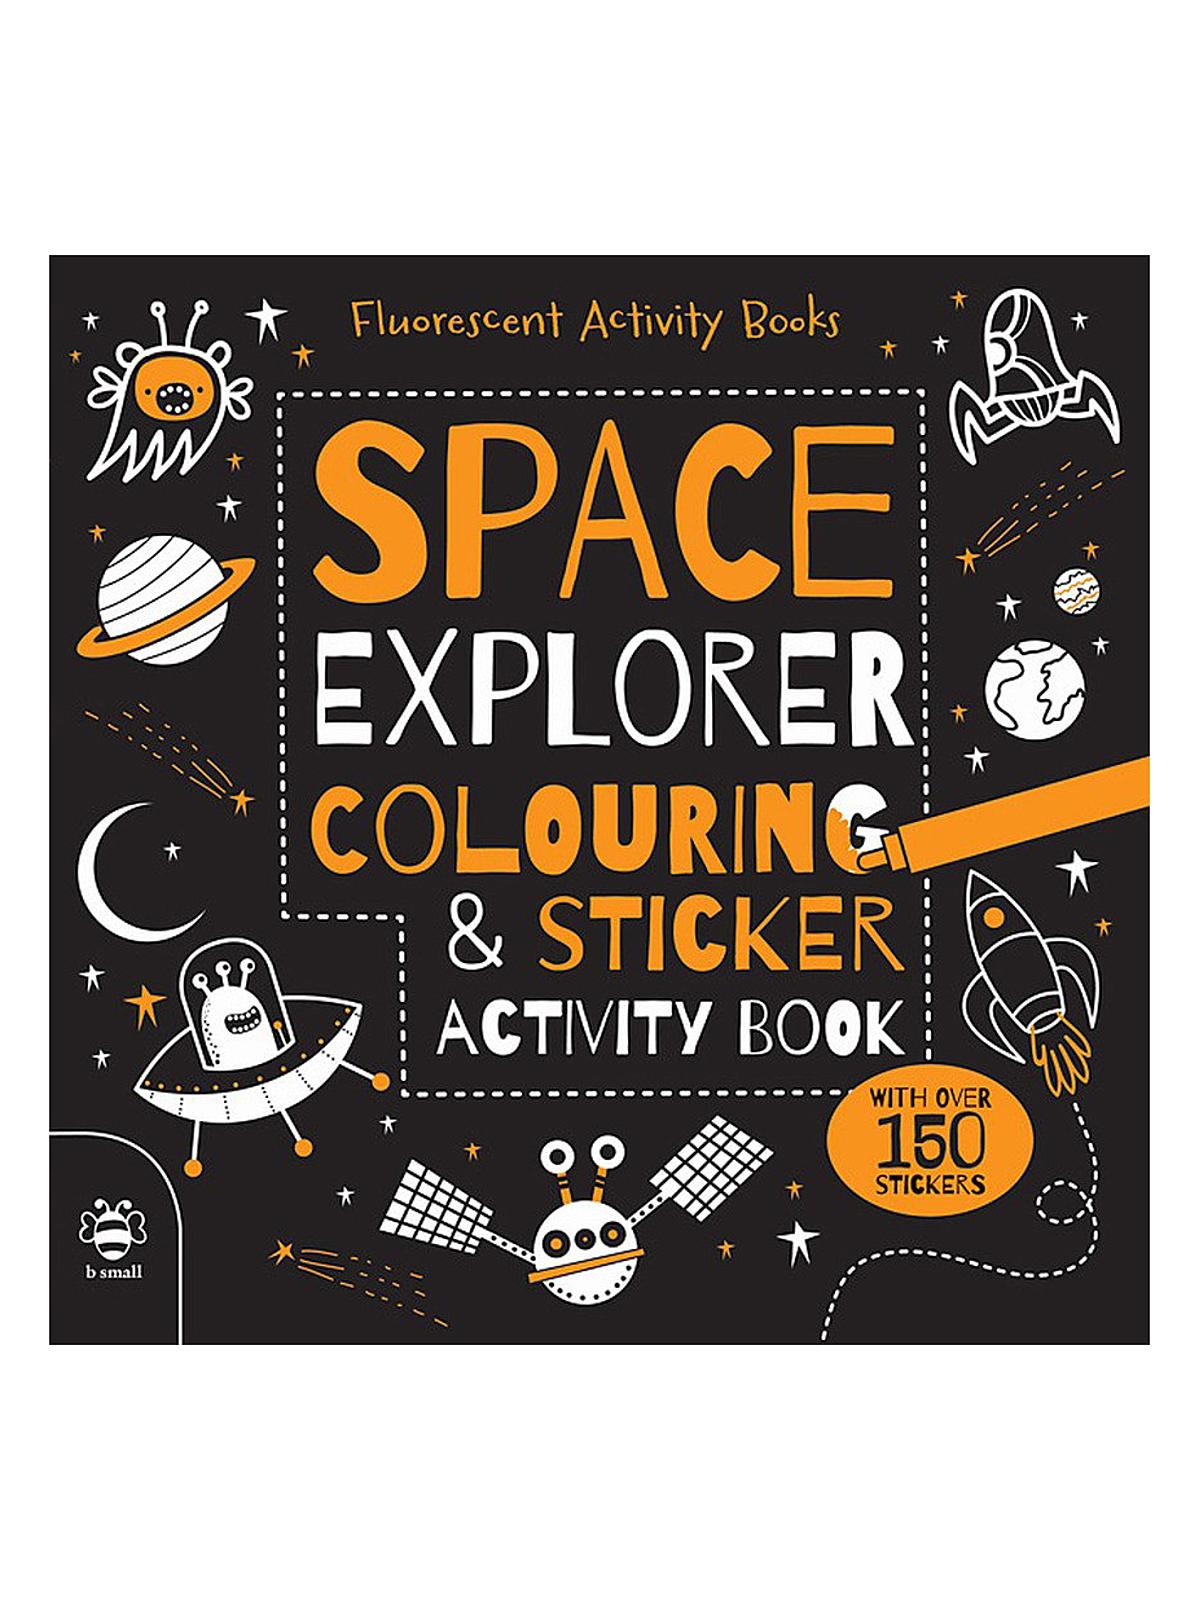 Space Explorer Colouring & Sticker Activity Book Each